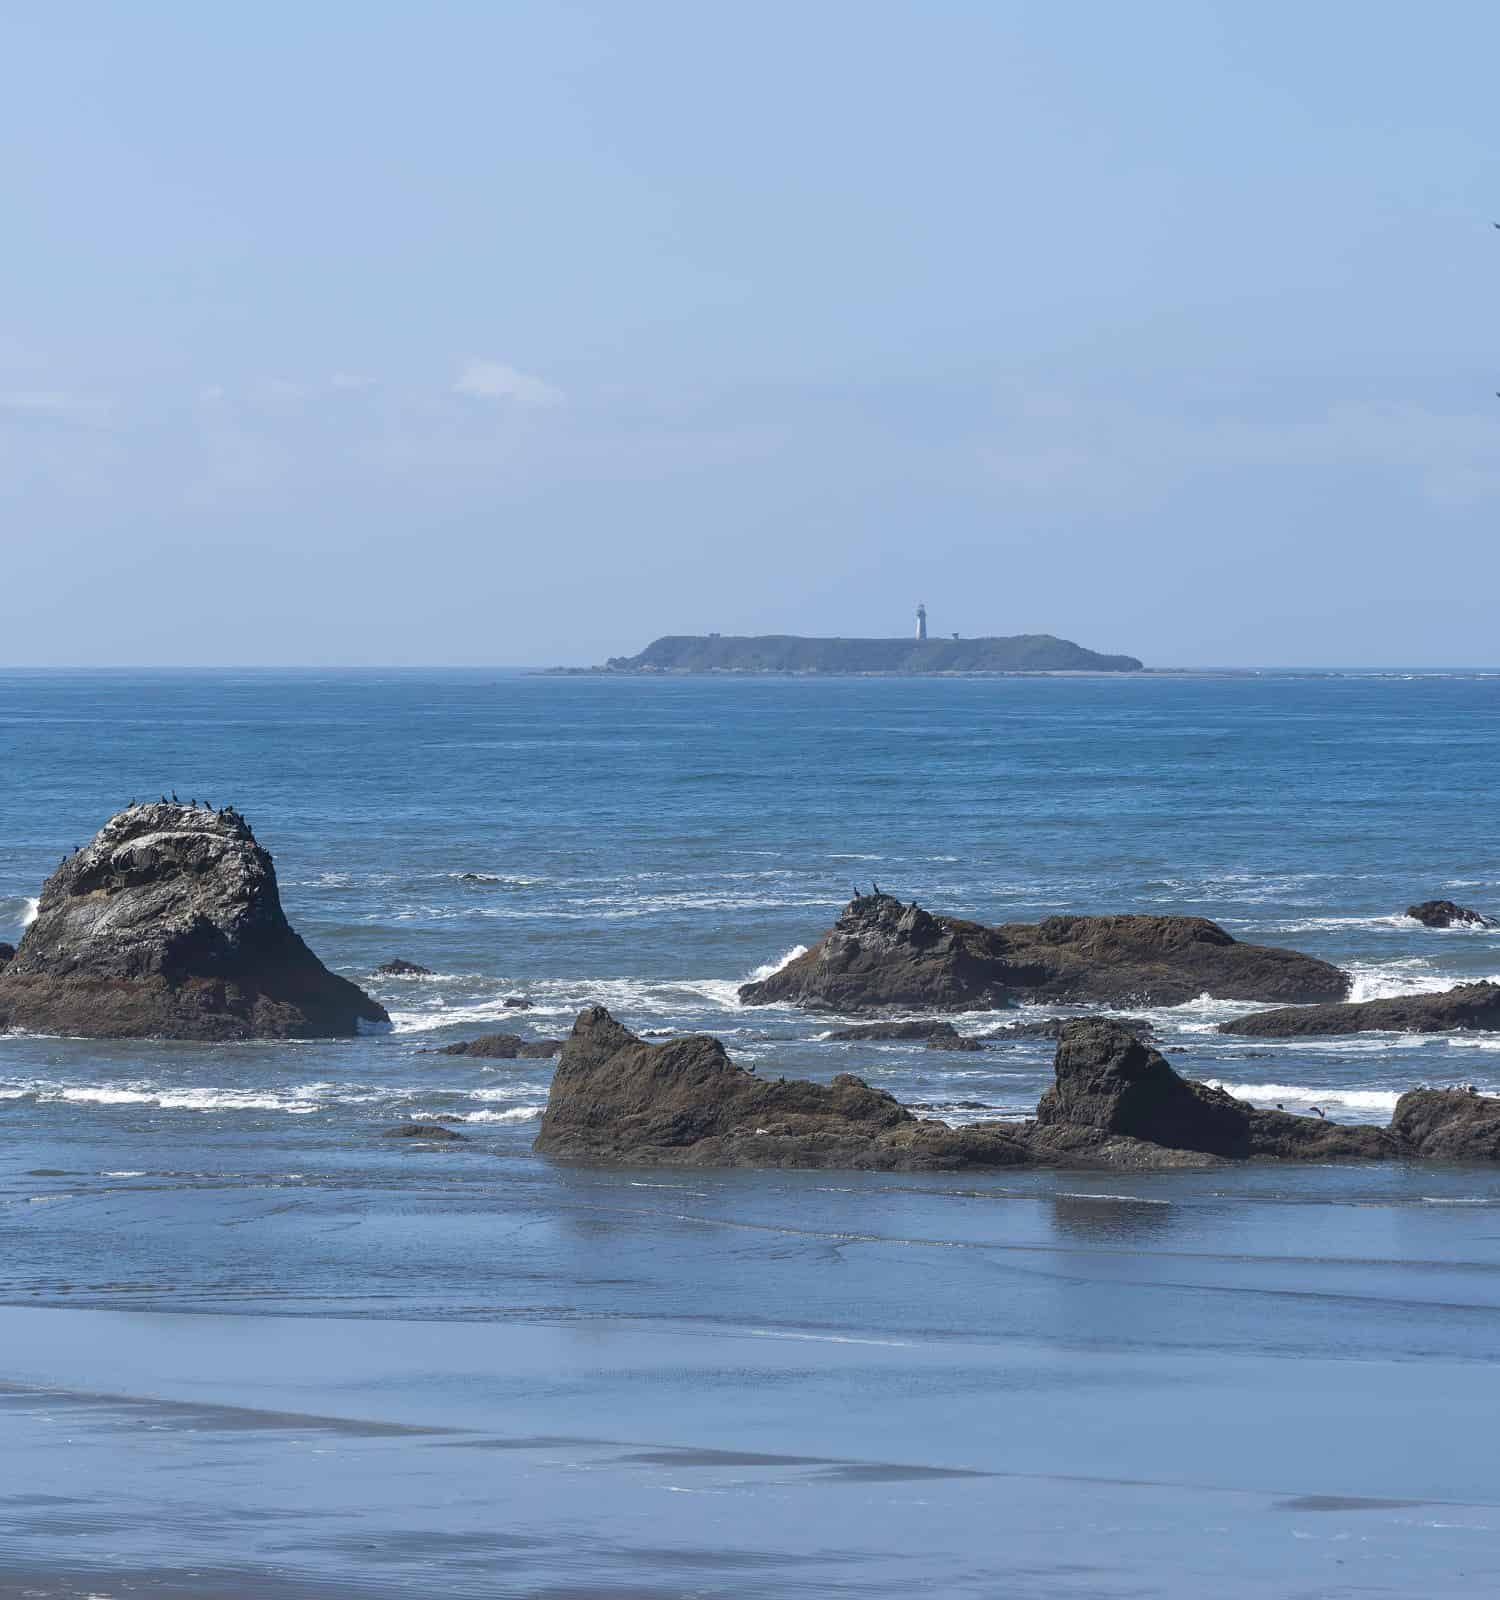 Destruction Island Lighthouse off the Pacific Coast